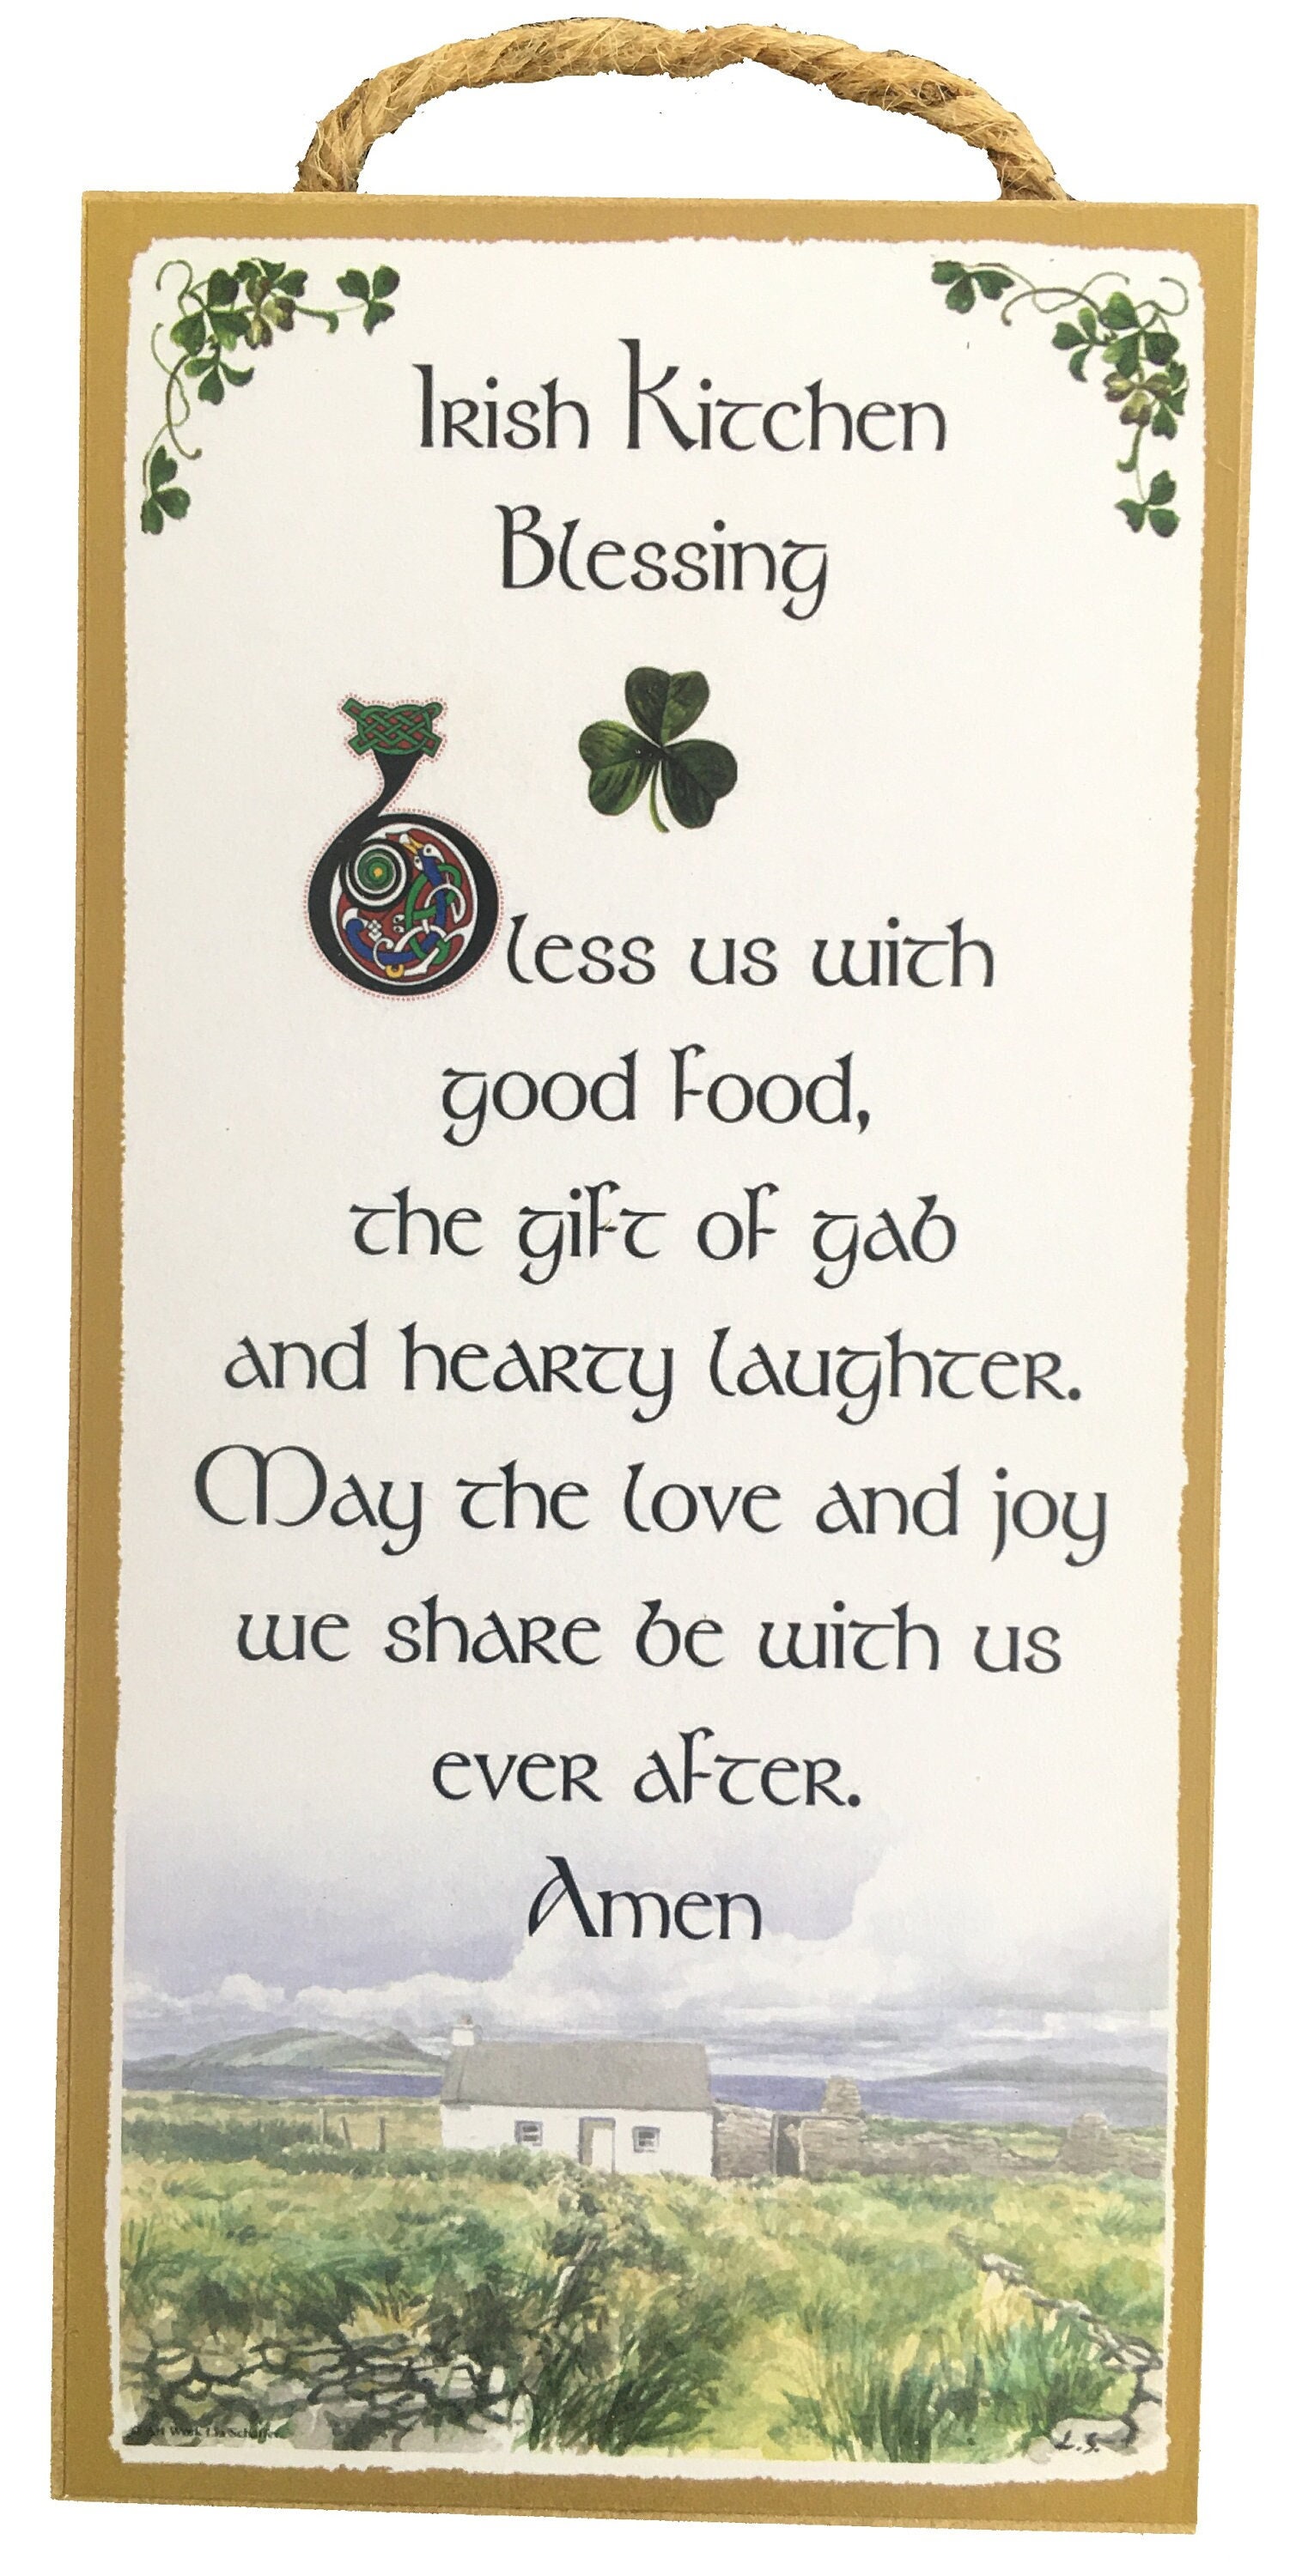 Irish Blessing Wall Art, Ireland Gift, Kitchen Wall Plaque, New Home Gift,  Chef Gift, Wedding Gift, Irish Kitchen Decor, Religious Prayer 